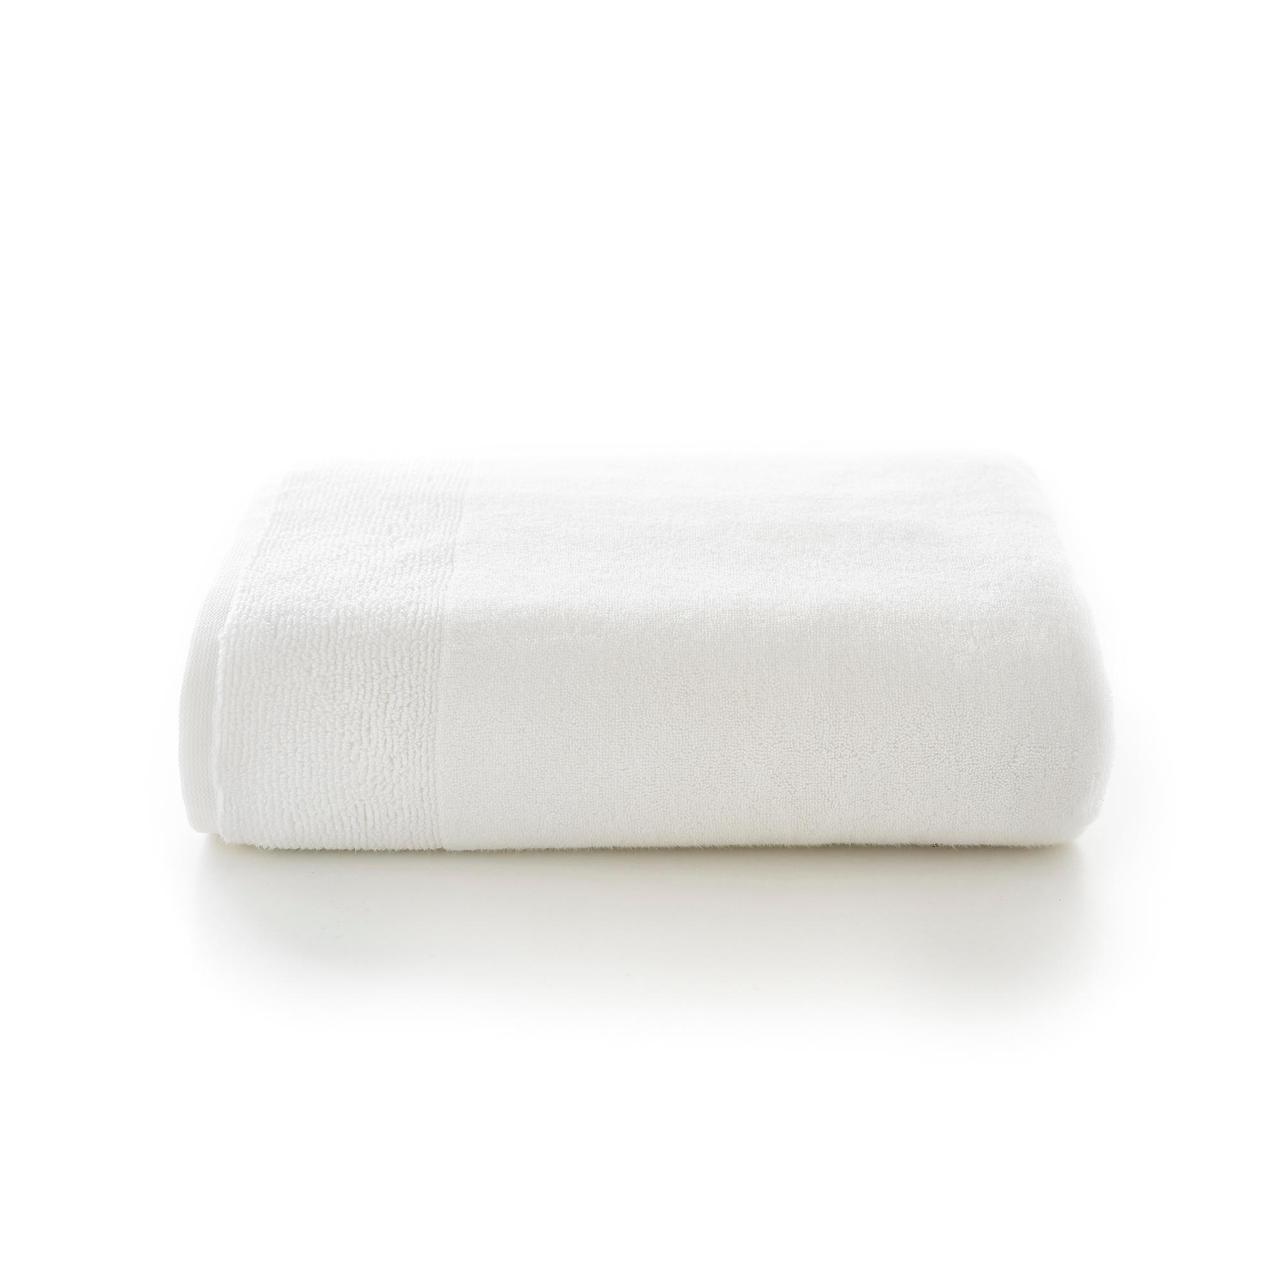 Deyongs Palazzo 800gsm Hotel Luxury Cotton Bath Sheet White